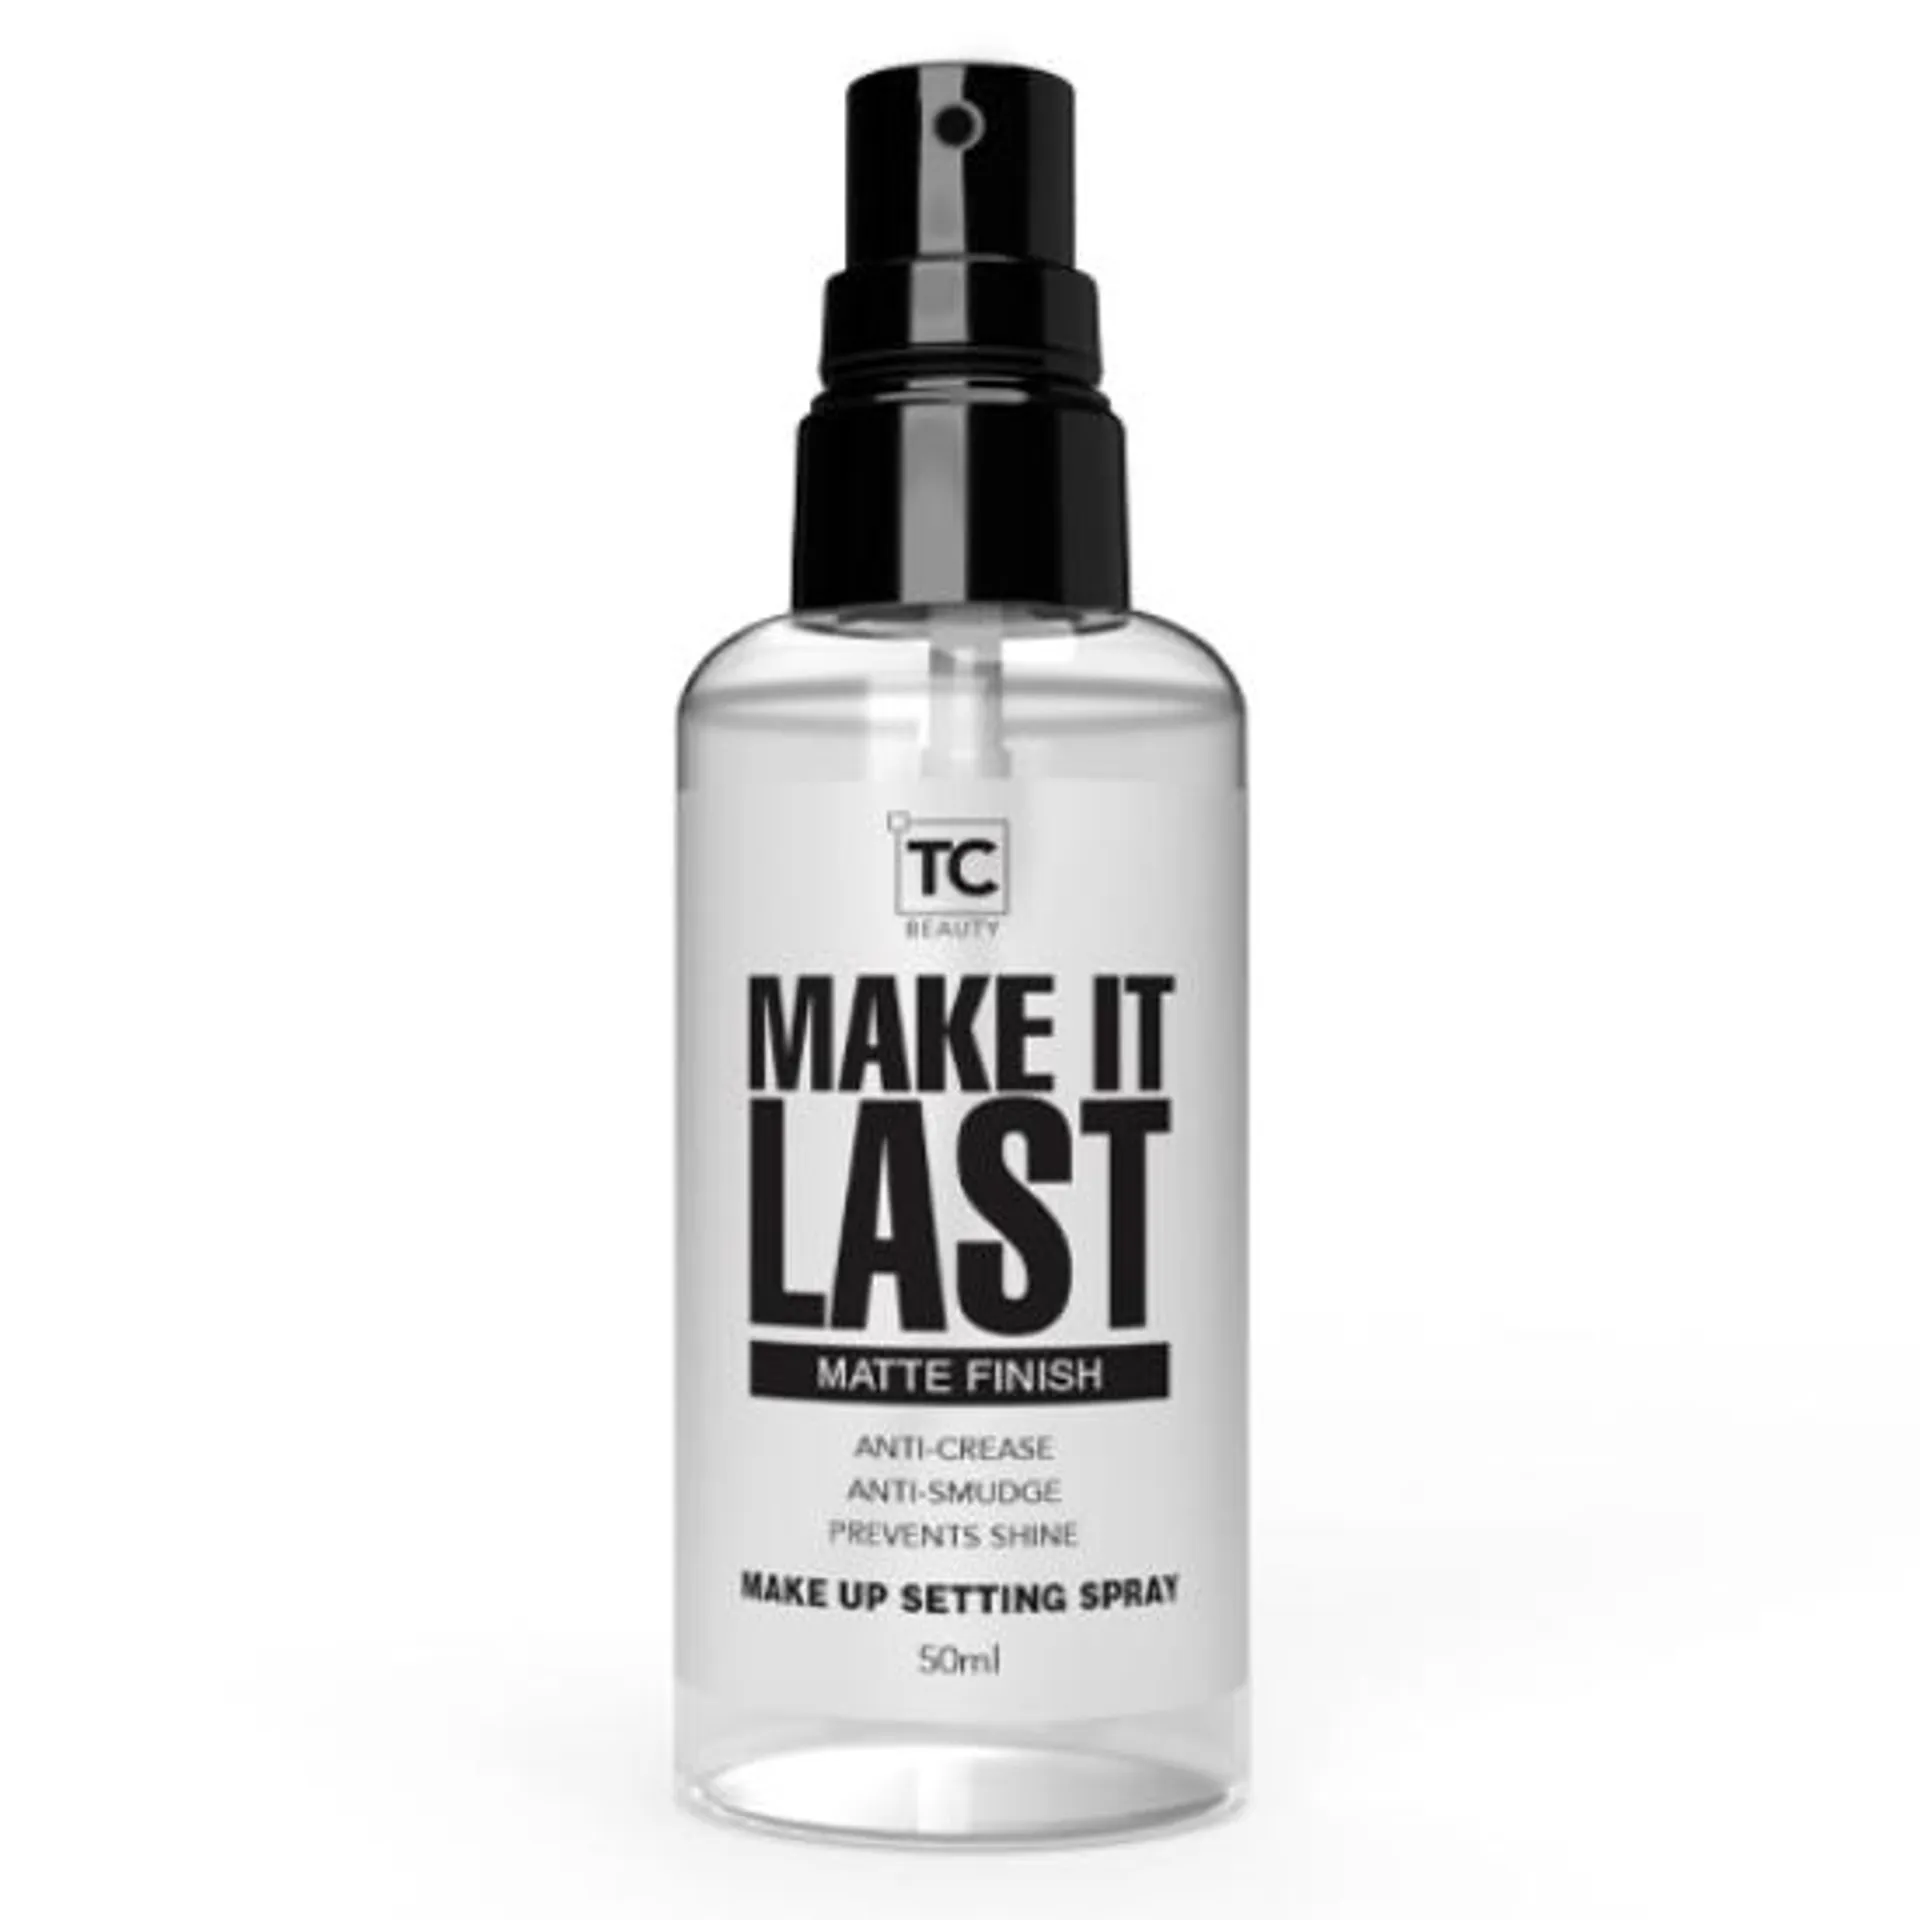 MAKE IT LAST - Makeup Setting Spray - 50ml